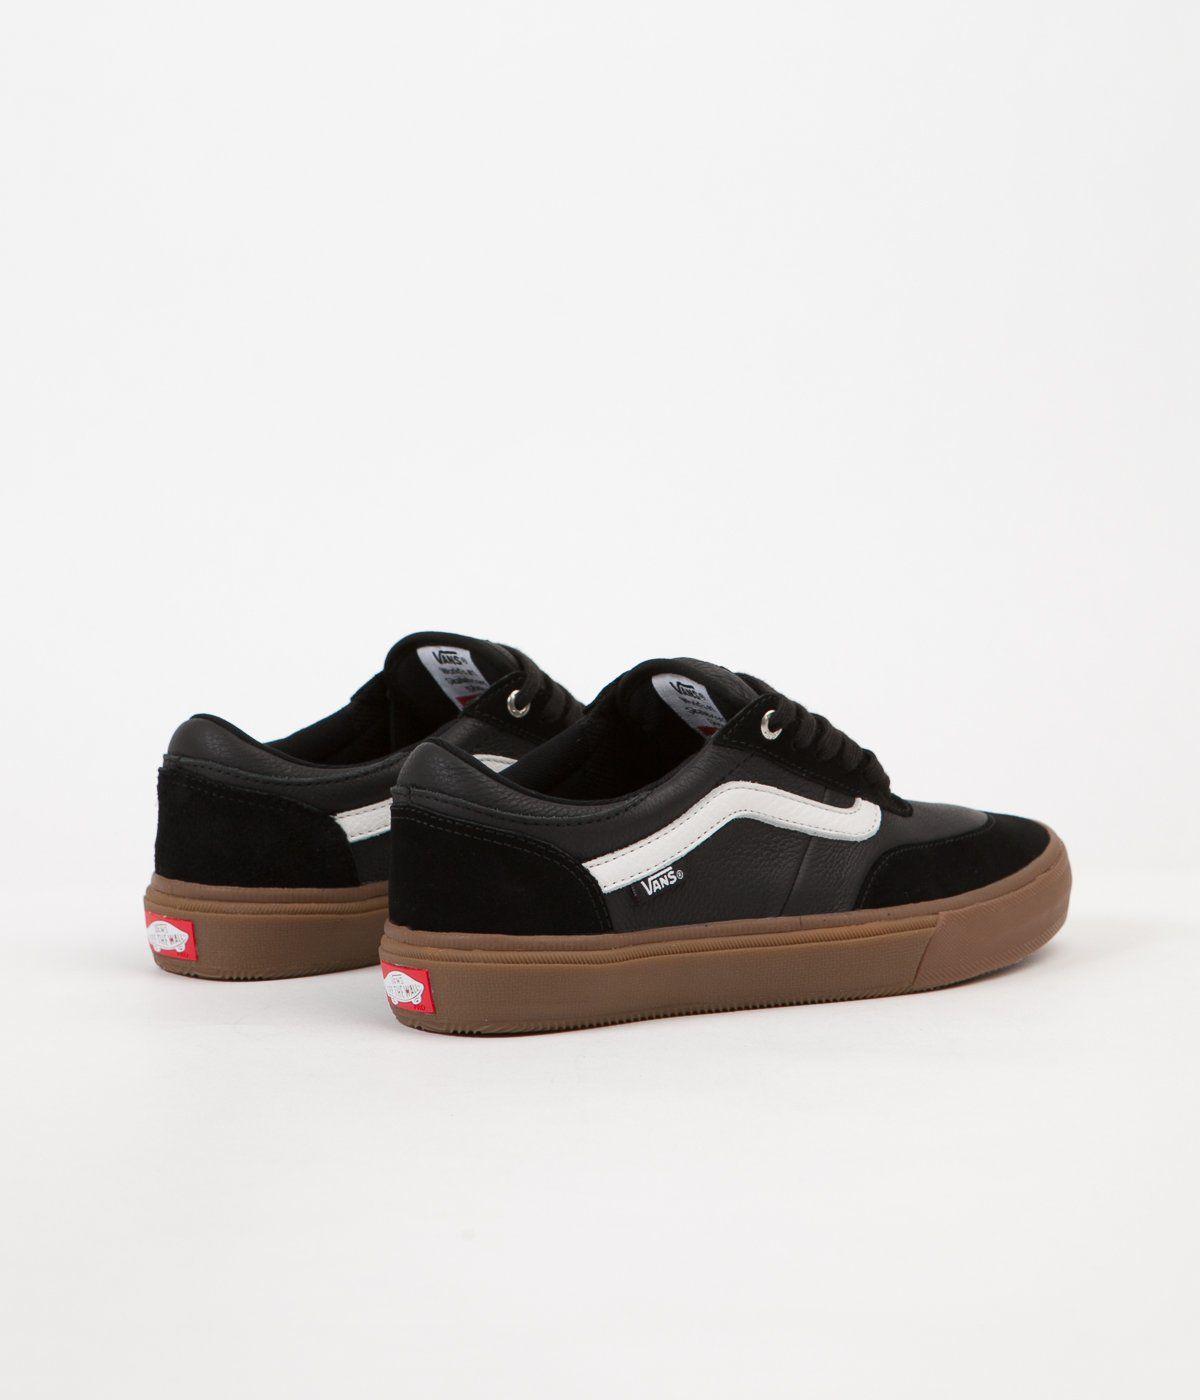 Black and Red Vans Logo - Vans Gilbert Crockett 2 Pro Shoes - Black / White / Gum | Flatspot